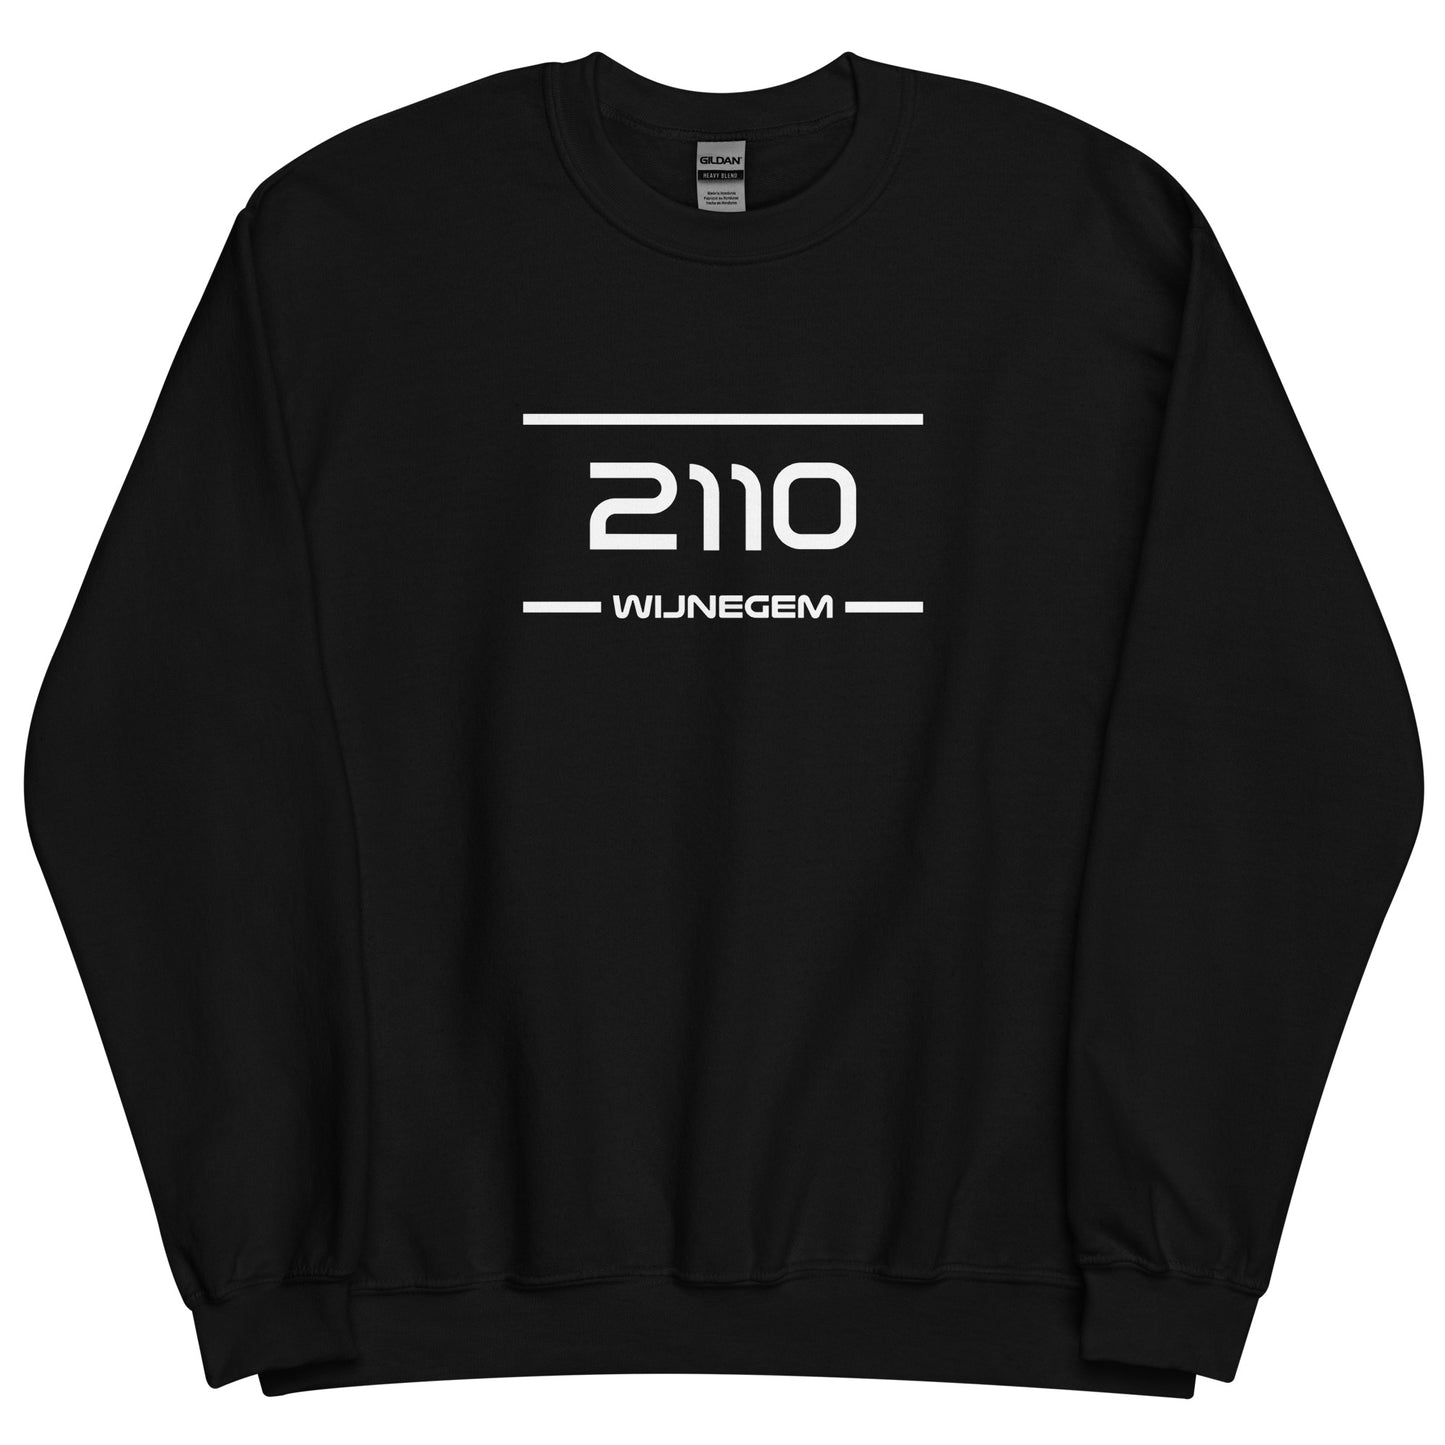 Sweater - 2110 - Wijnegem (M/V)